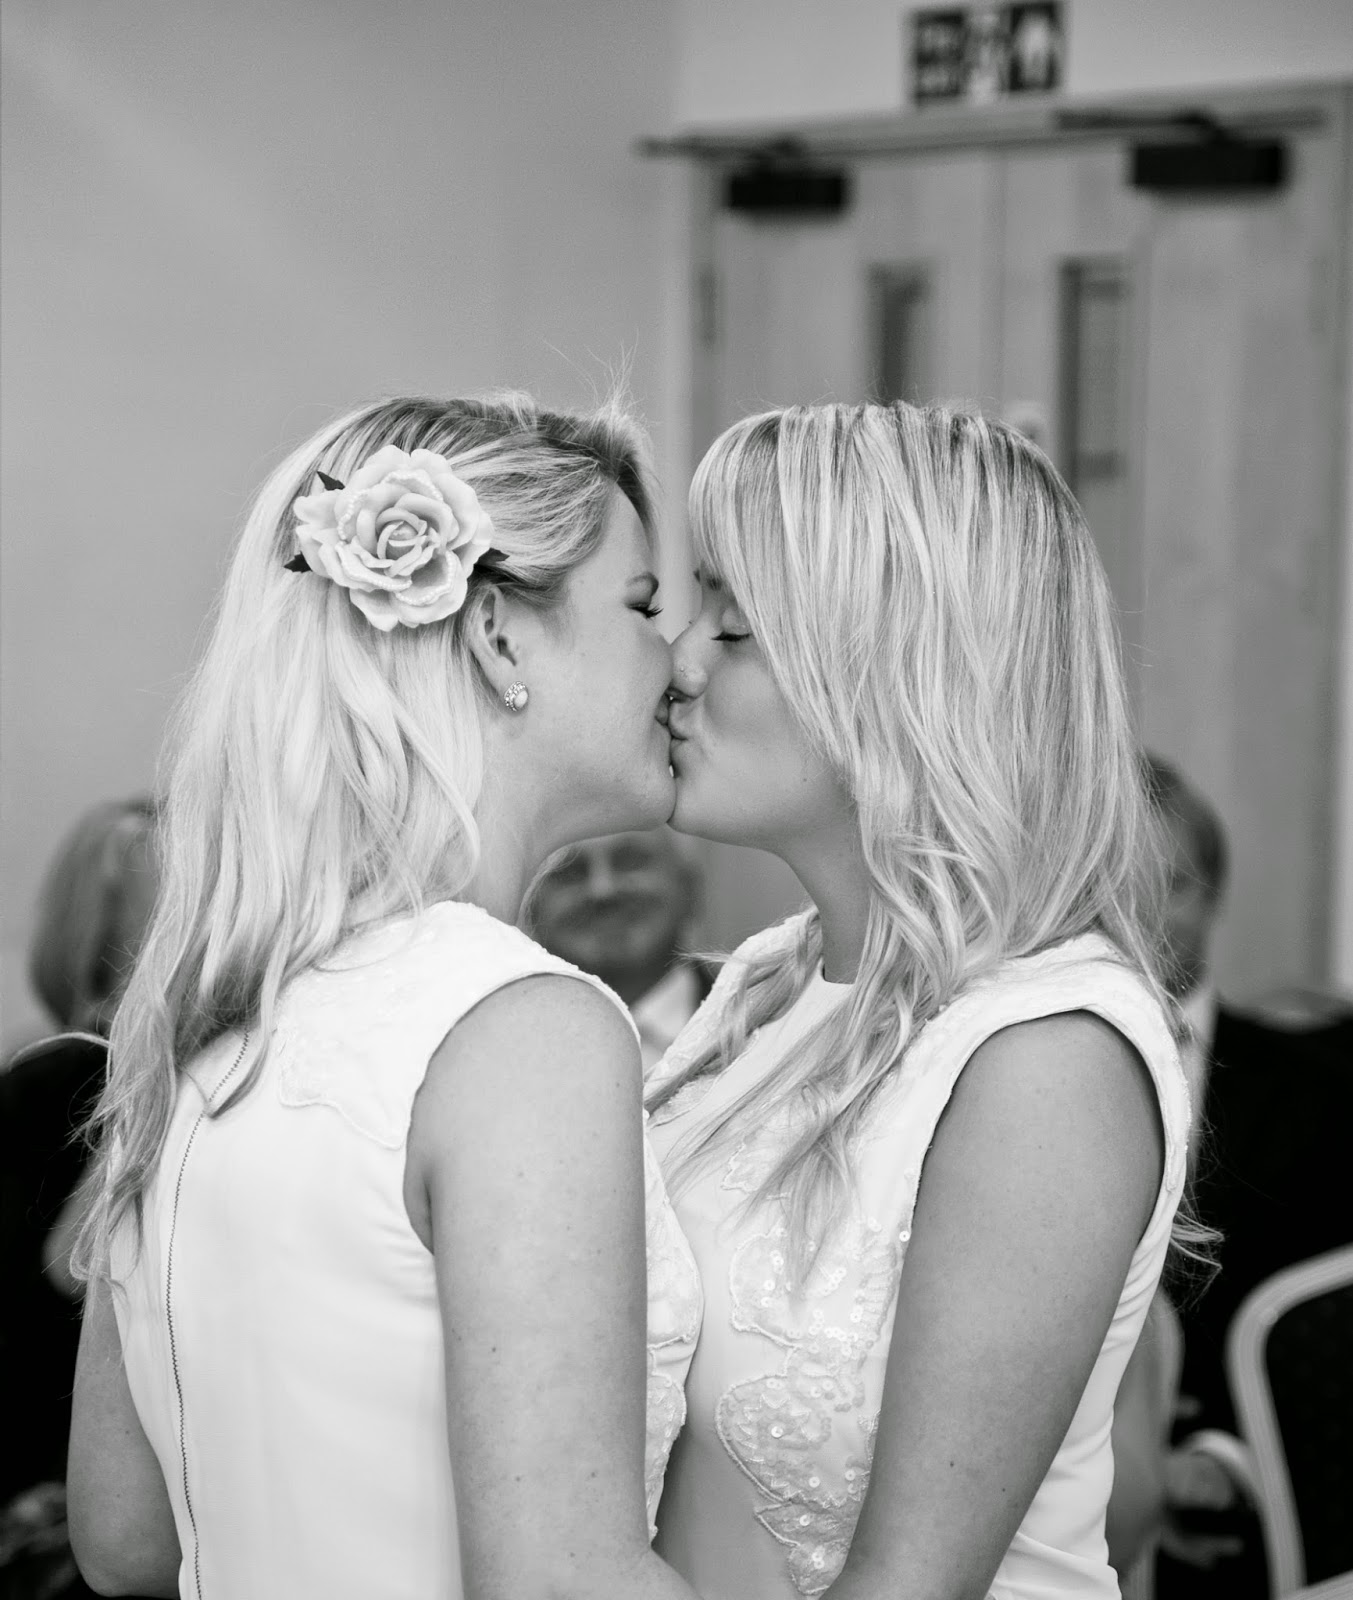 Doing lesbian. Две блондинки поцелуй. 2 Блондинки. Блондинки-невесты-лесбиянки. Лесбийская прическа белая.